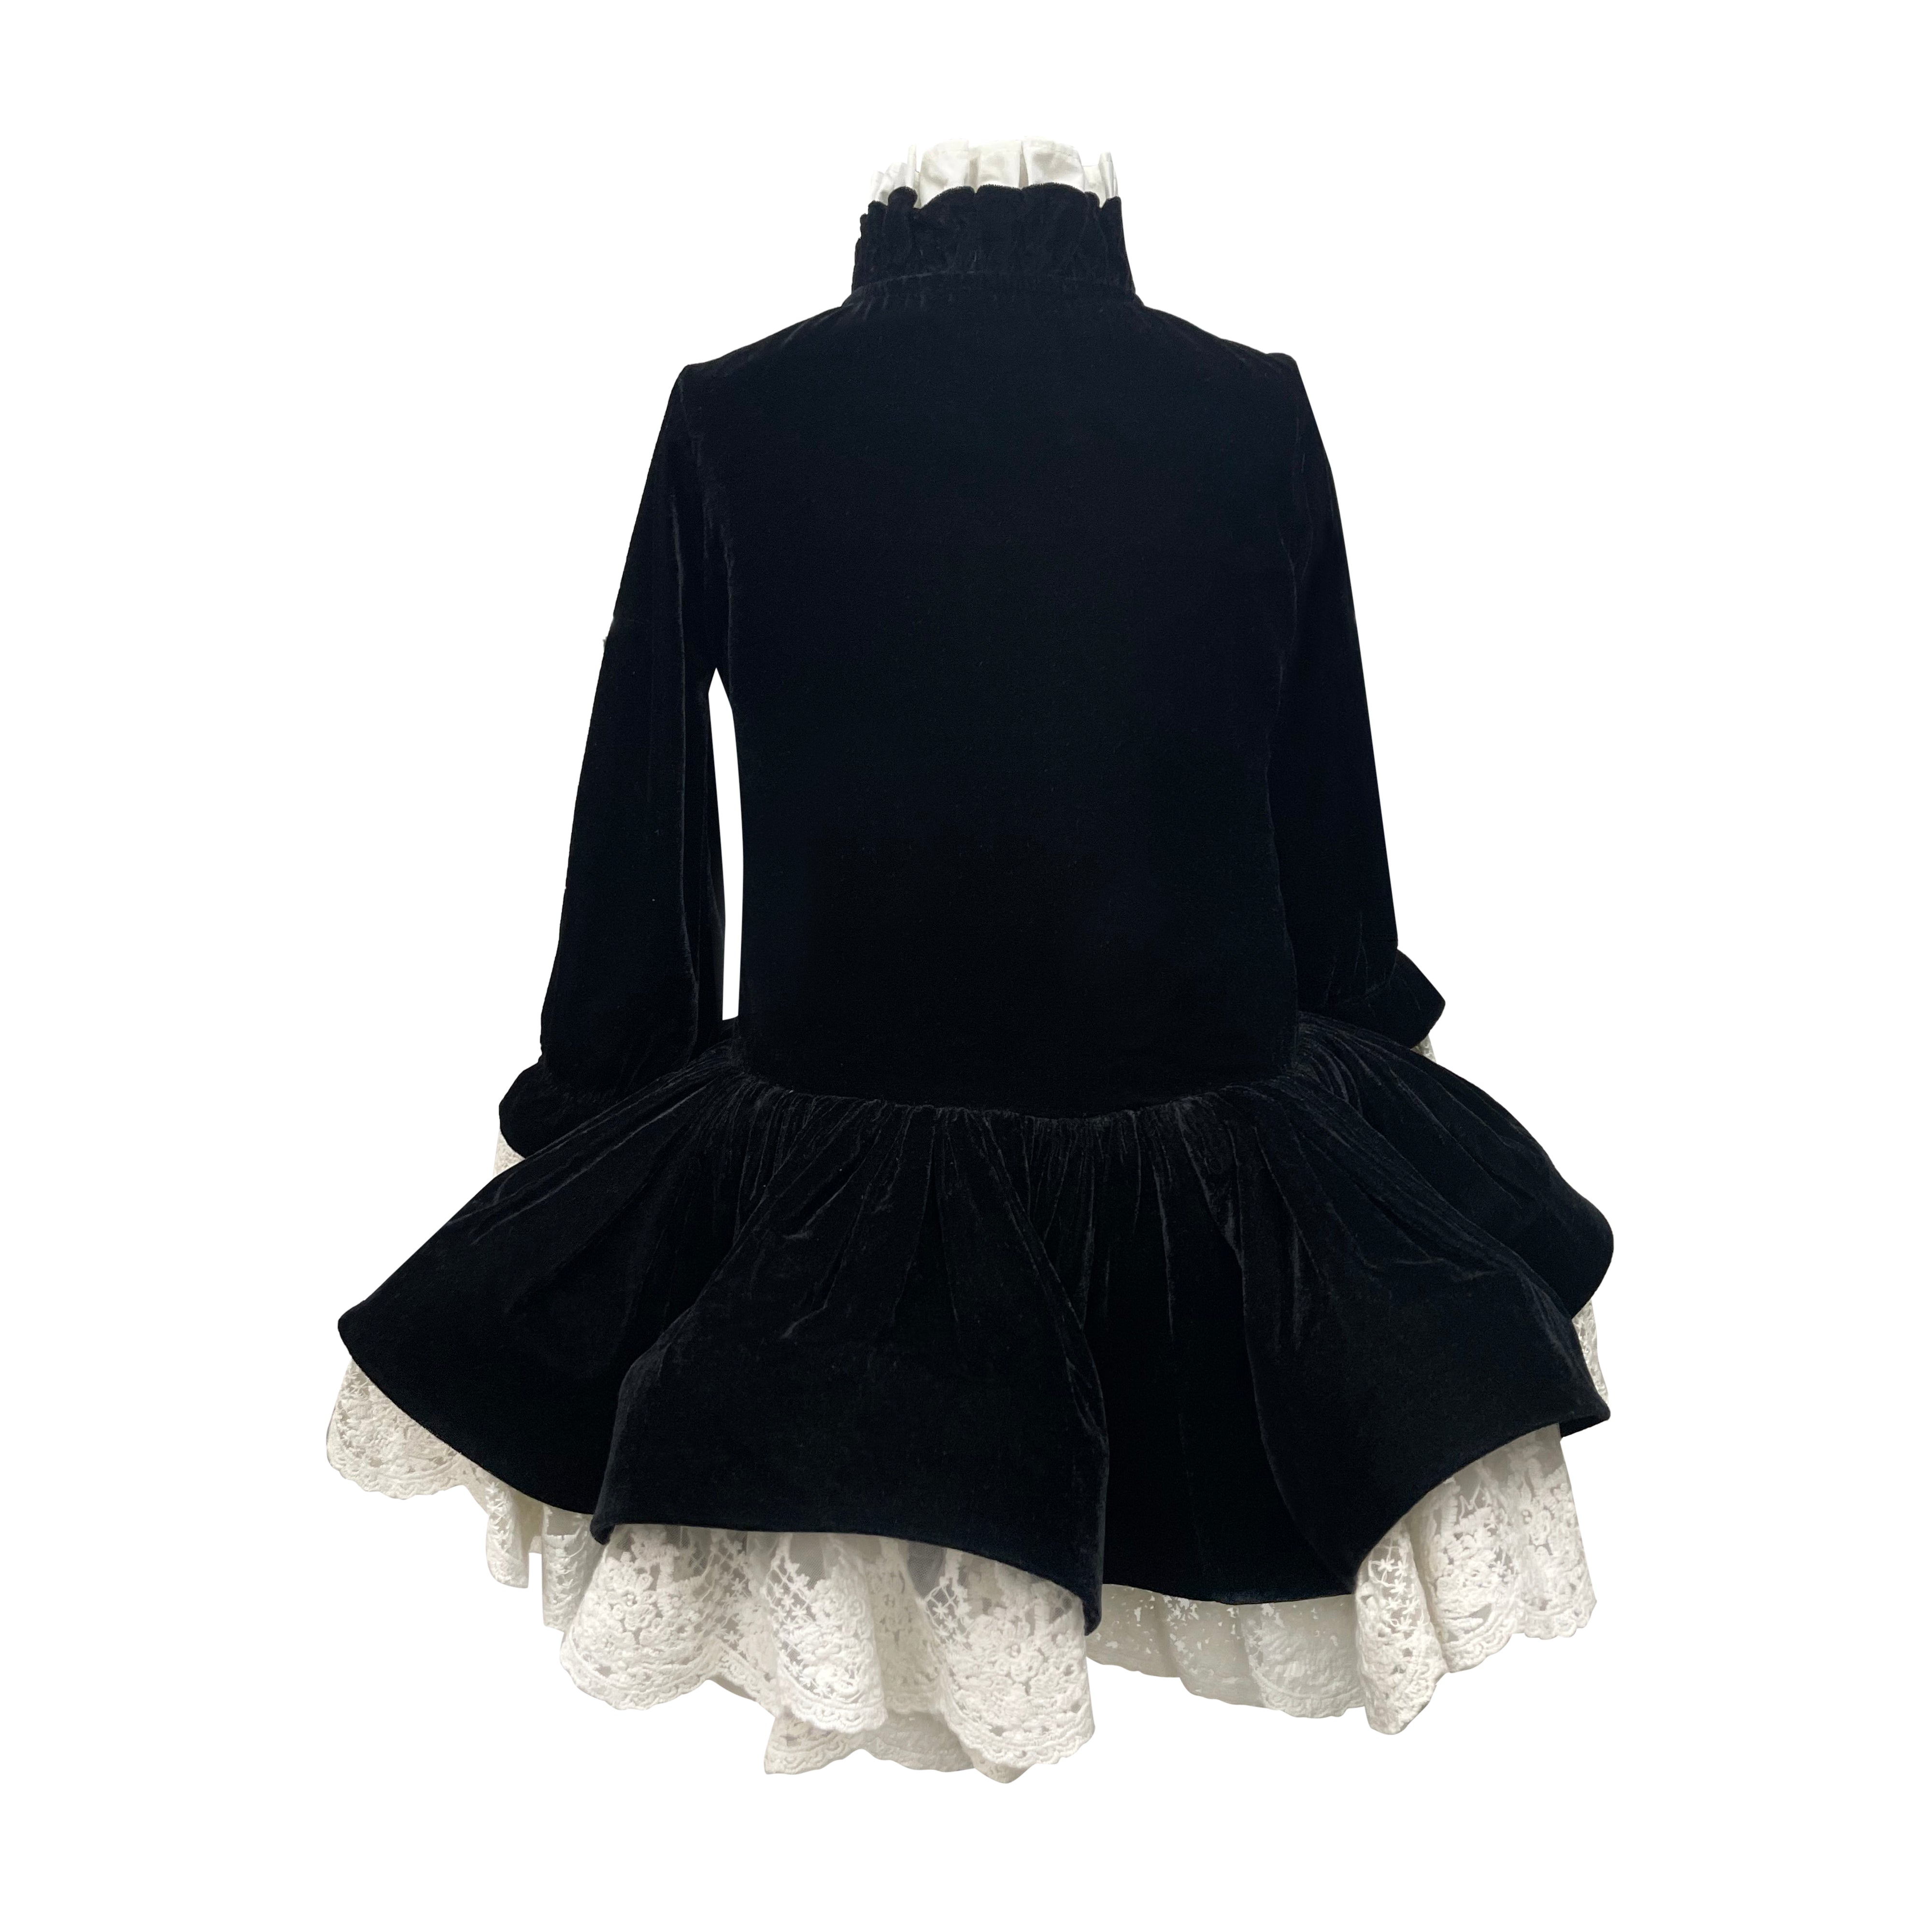 The Lacy Velvet Taylor Dress